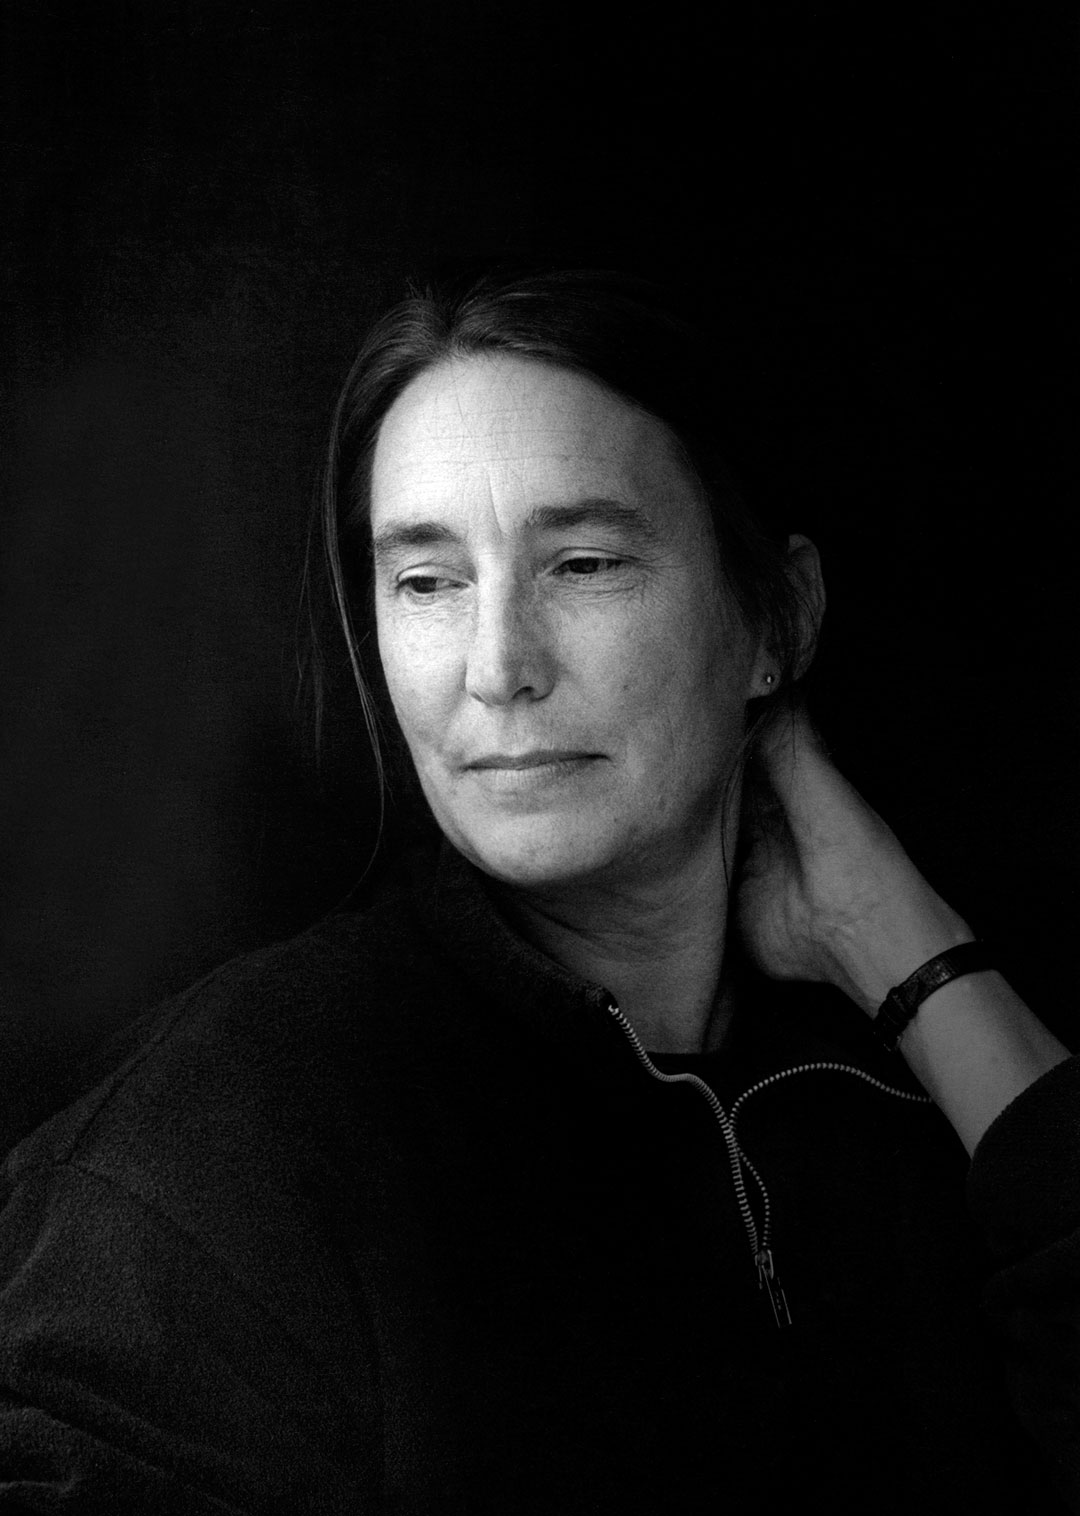 Portrait of Jenny Holzer by Nanda Lanfranco - image courtesy the artist